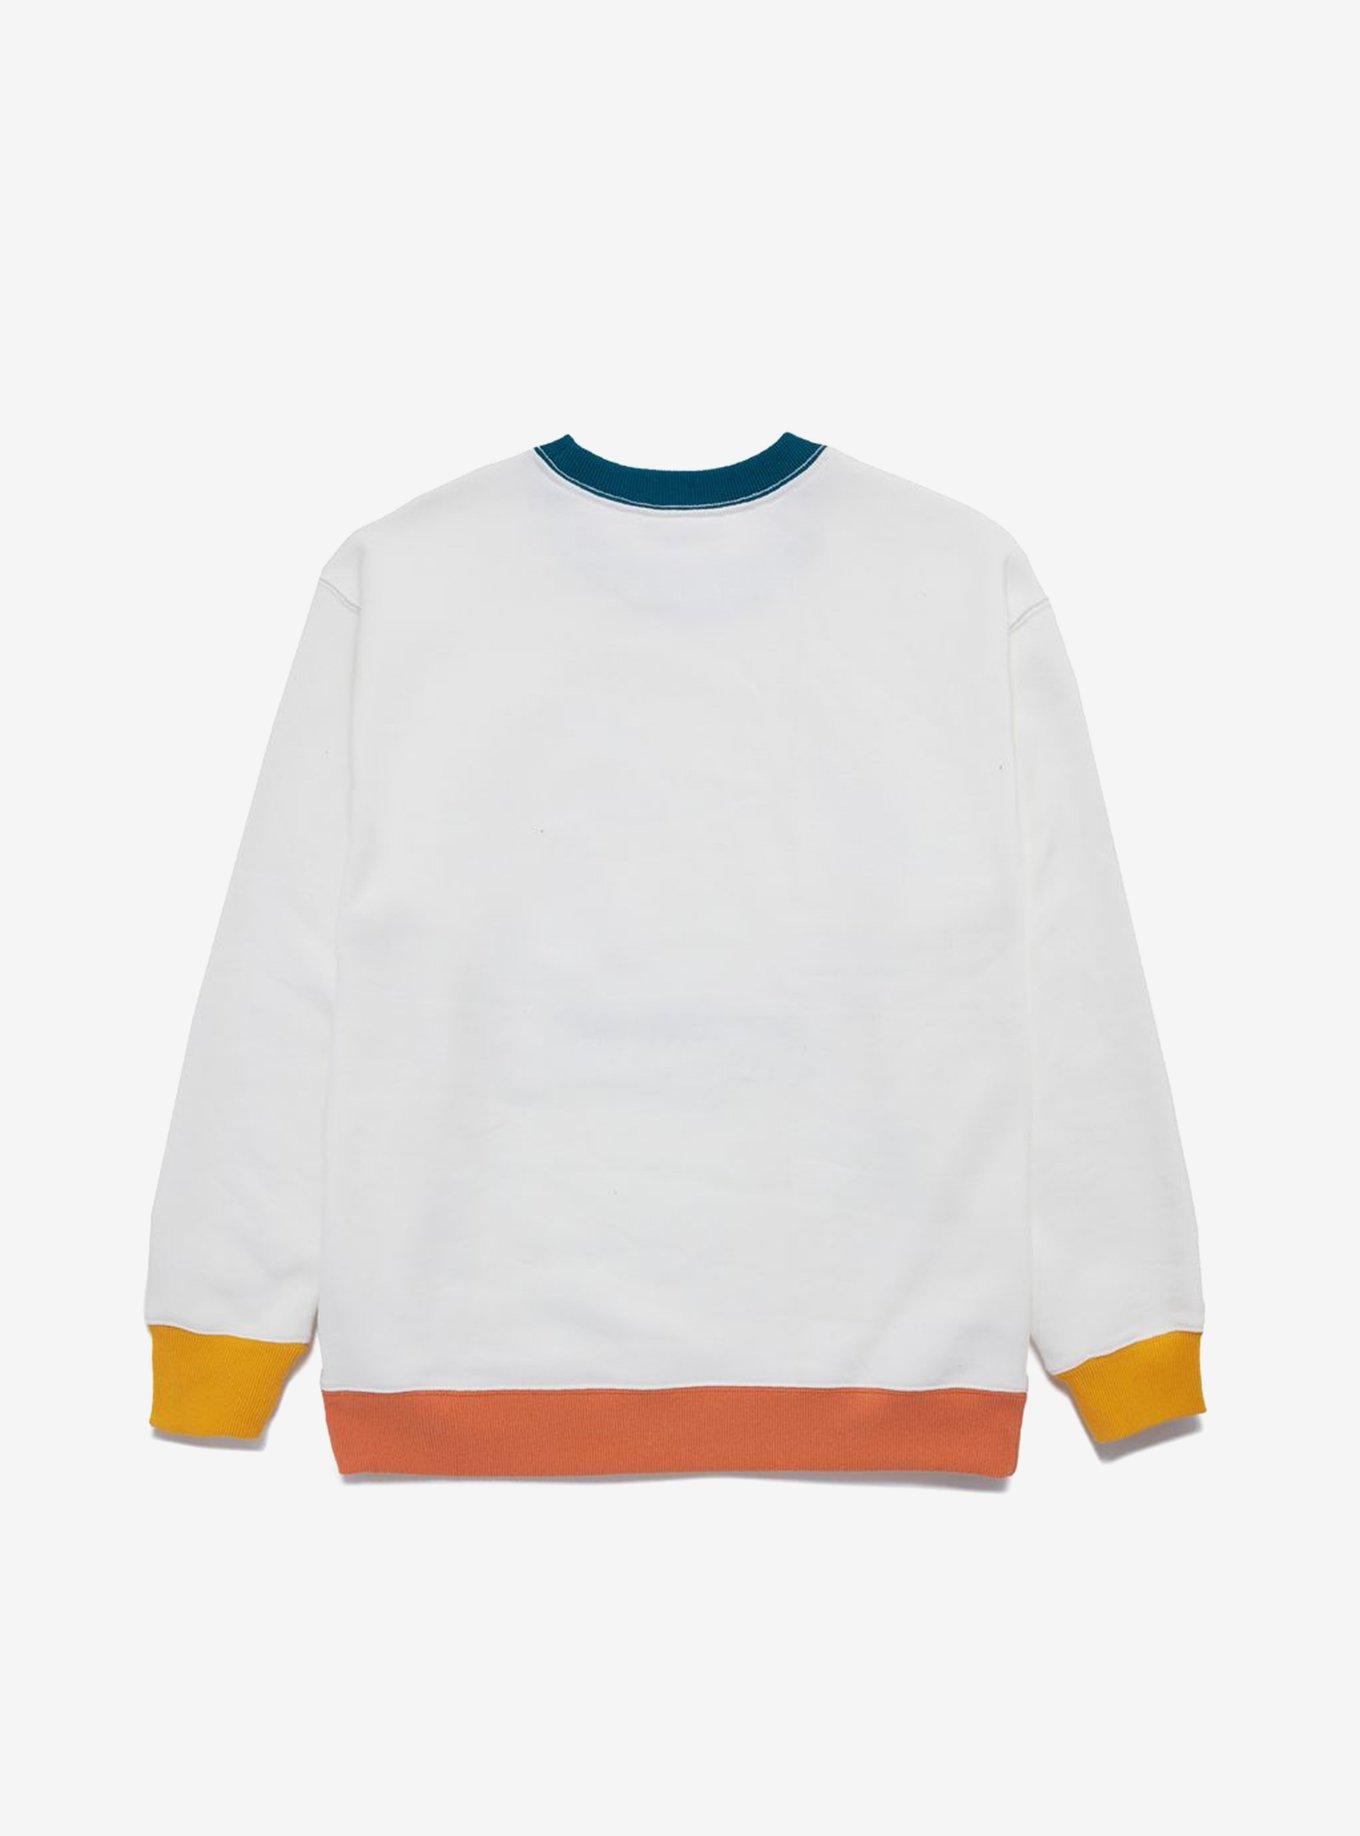 Samii Ryan X Peanuts Duo Color-Block Sweatshirt, MULTI, alternate